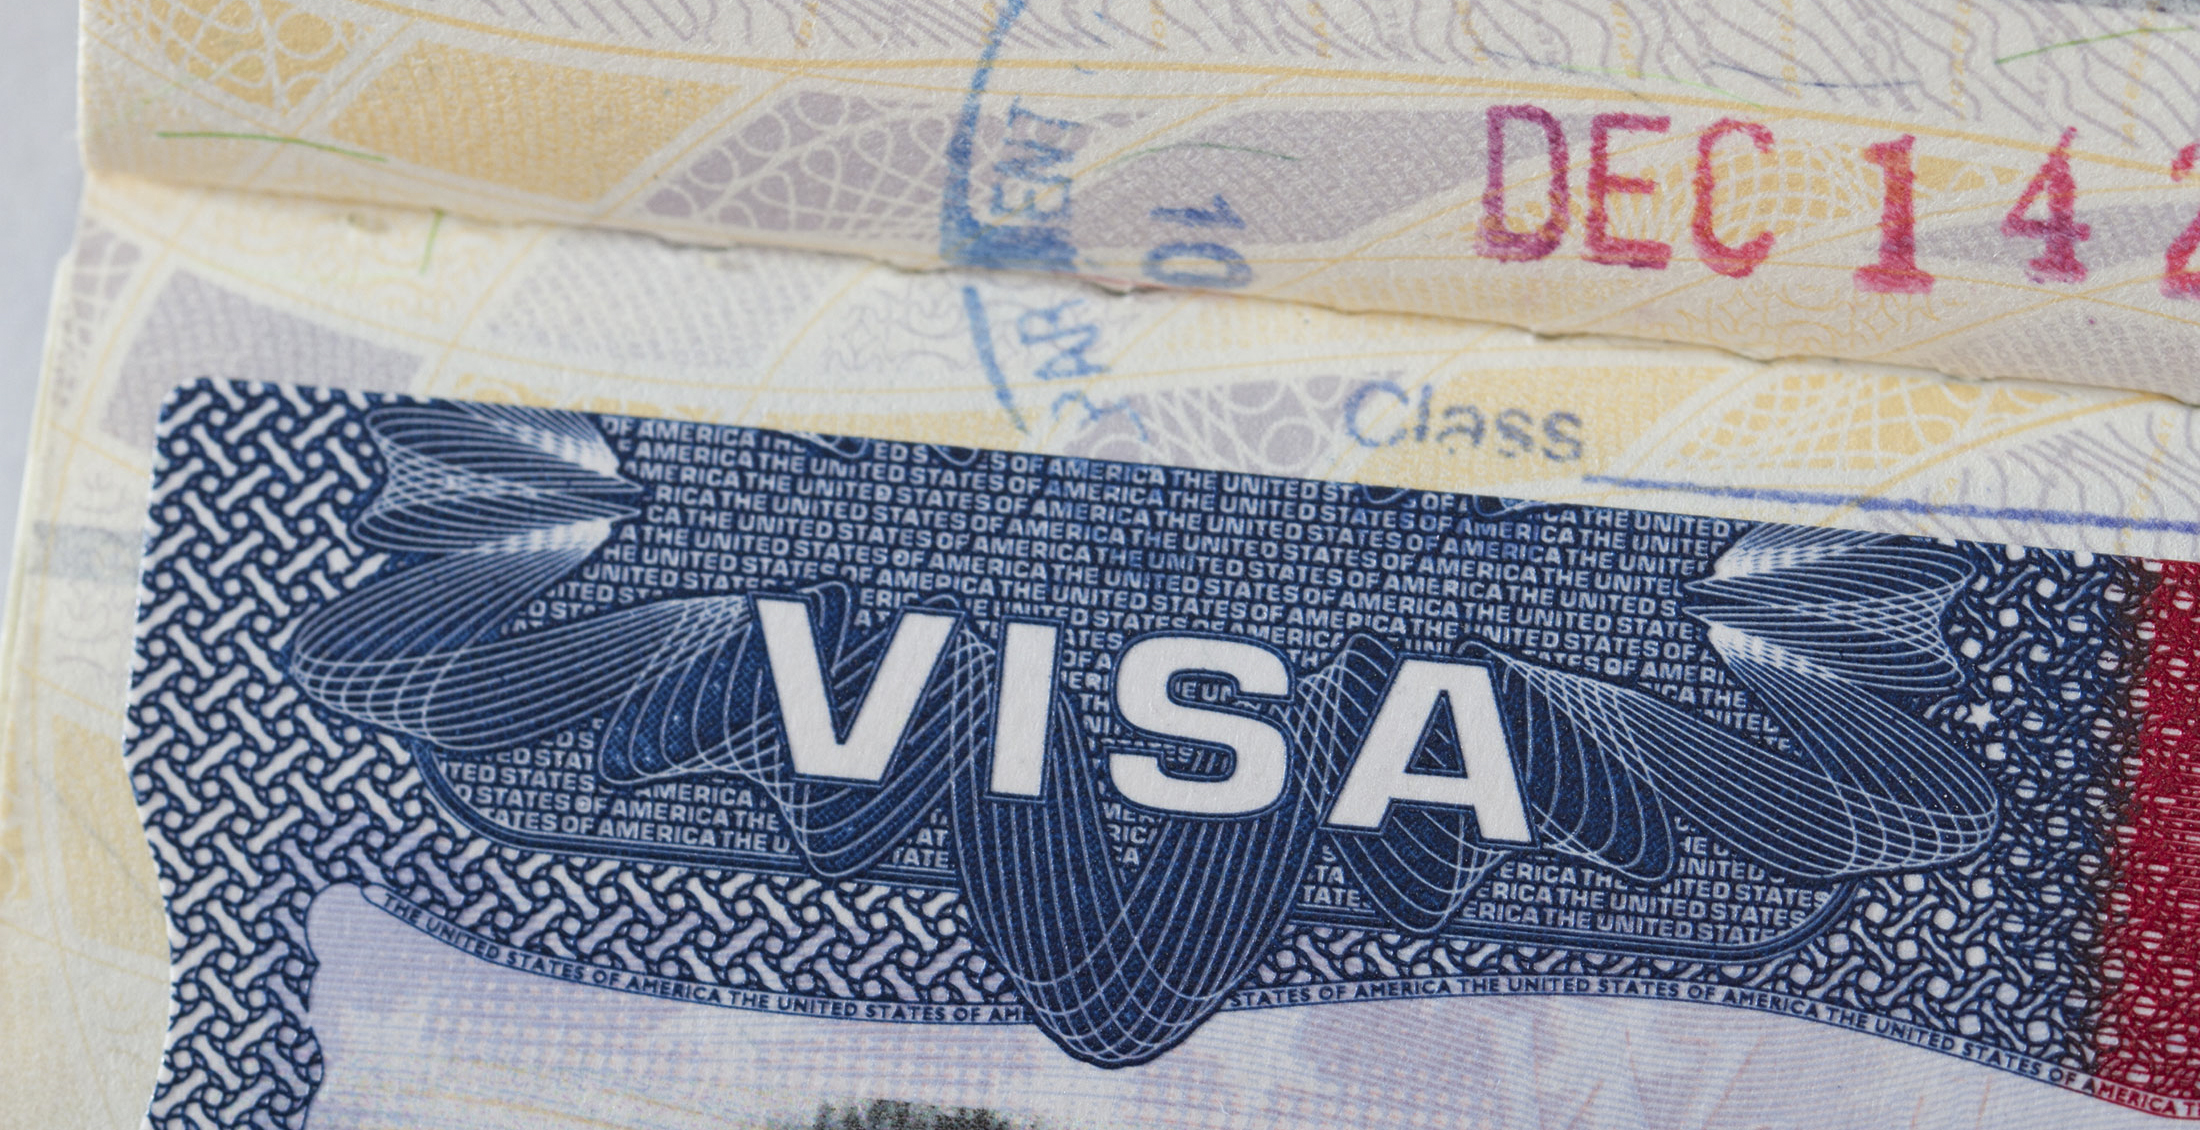 a United States Visa